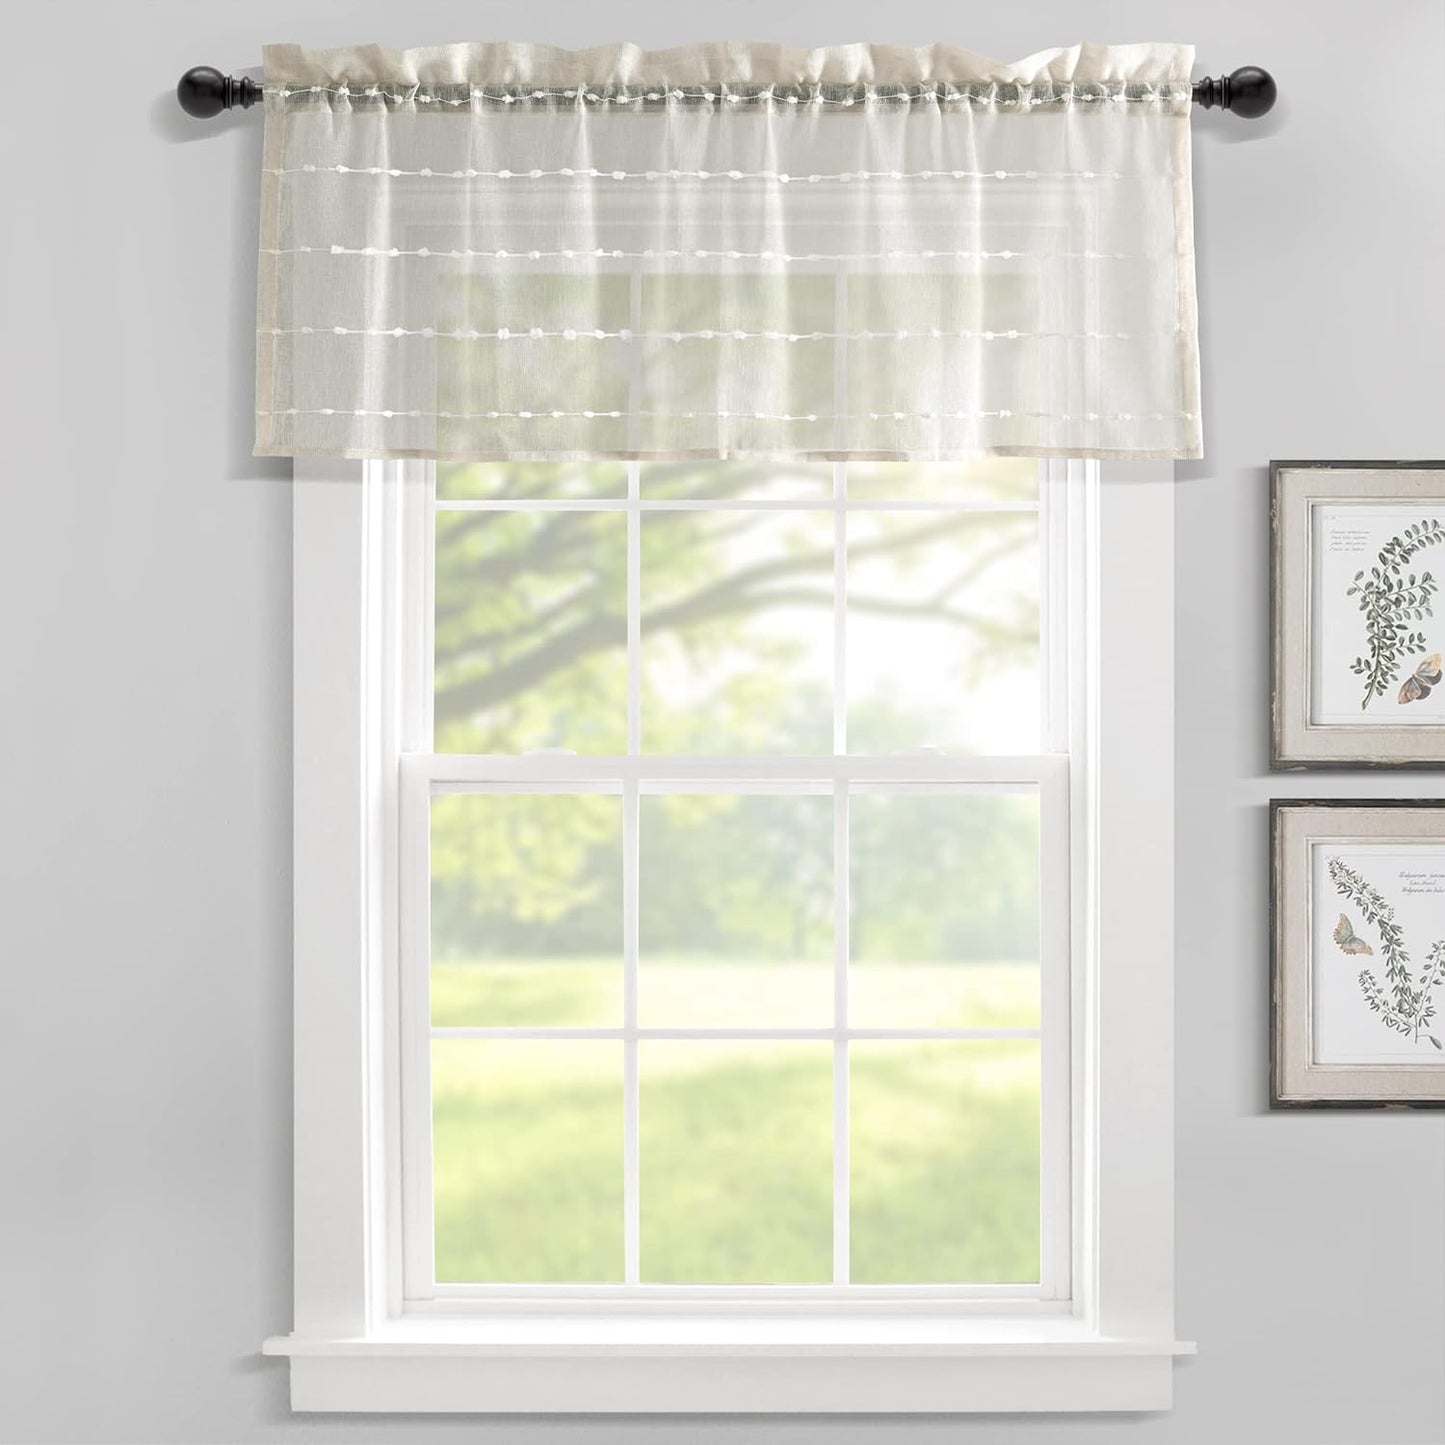 Lush Decor Farmhouse Textured Grommet Sheer Window Curtain Panel Pair, 38"W X 95"L, Gray  Triangle Home Fashions Beige Single Valance